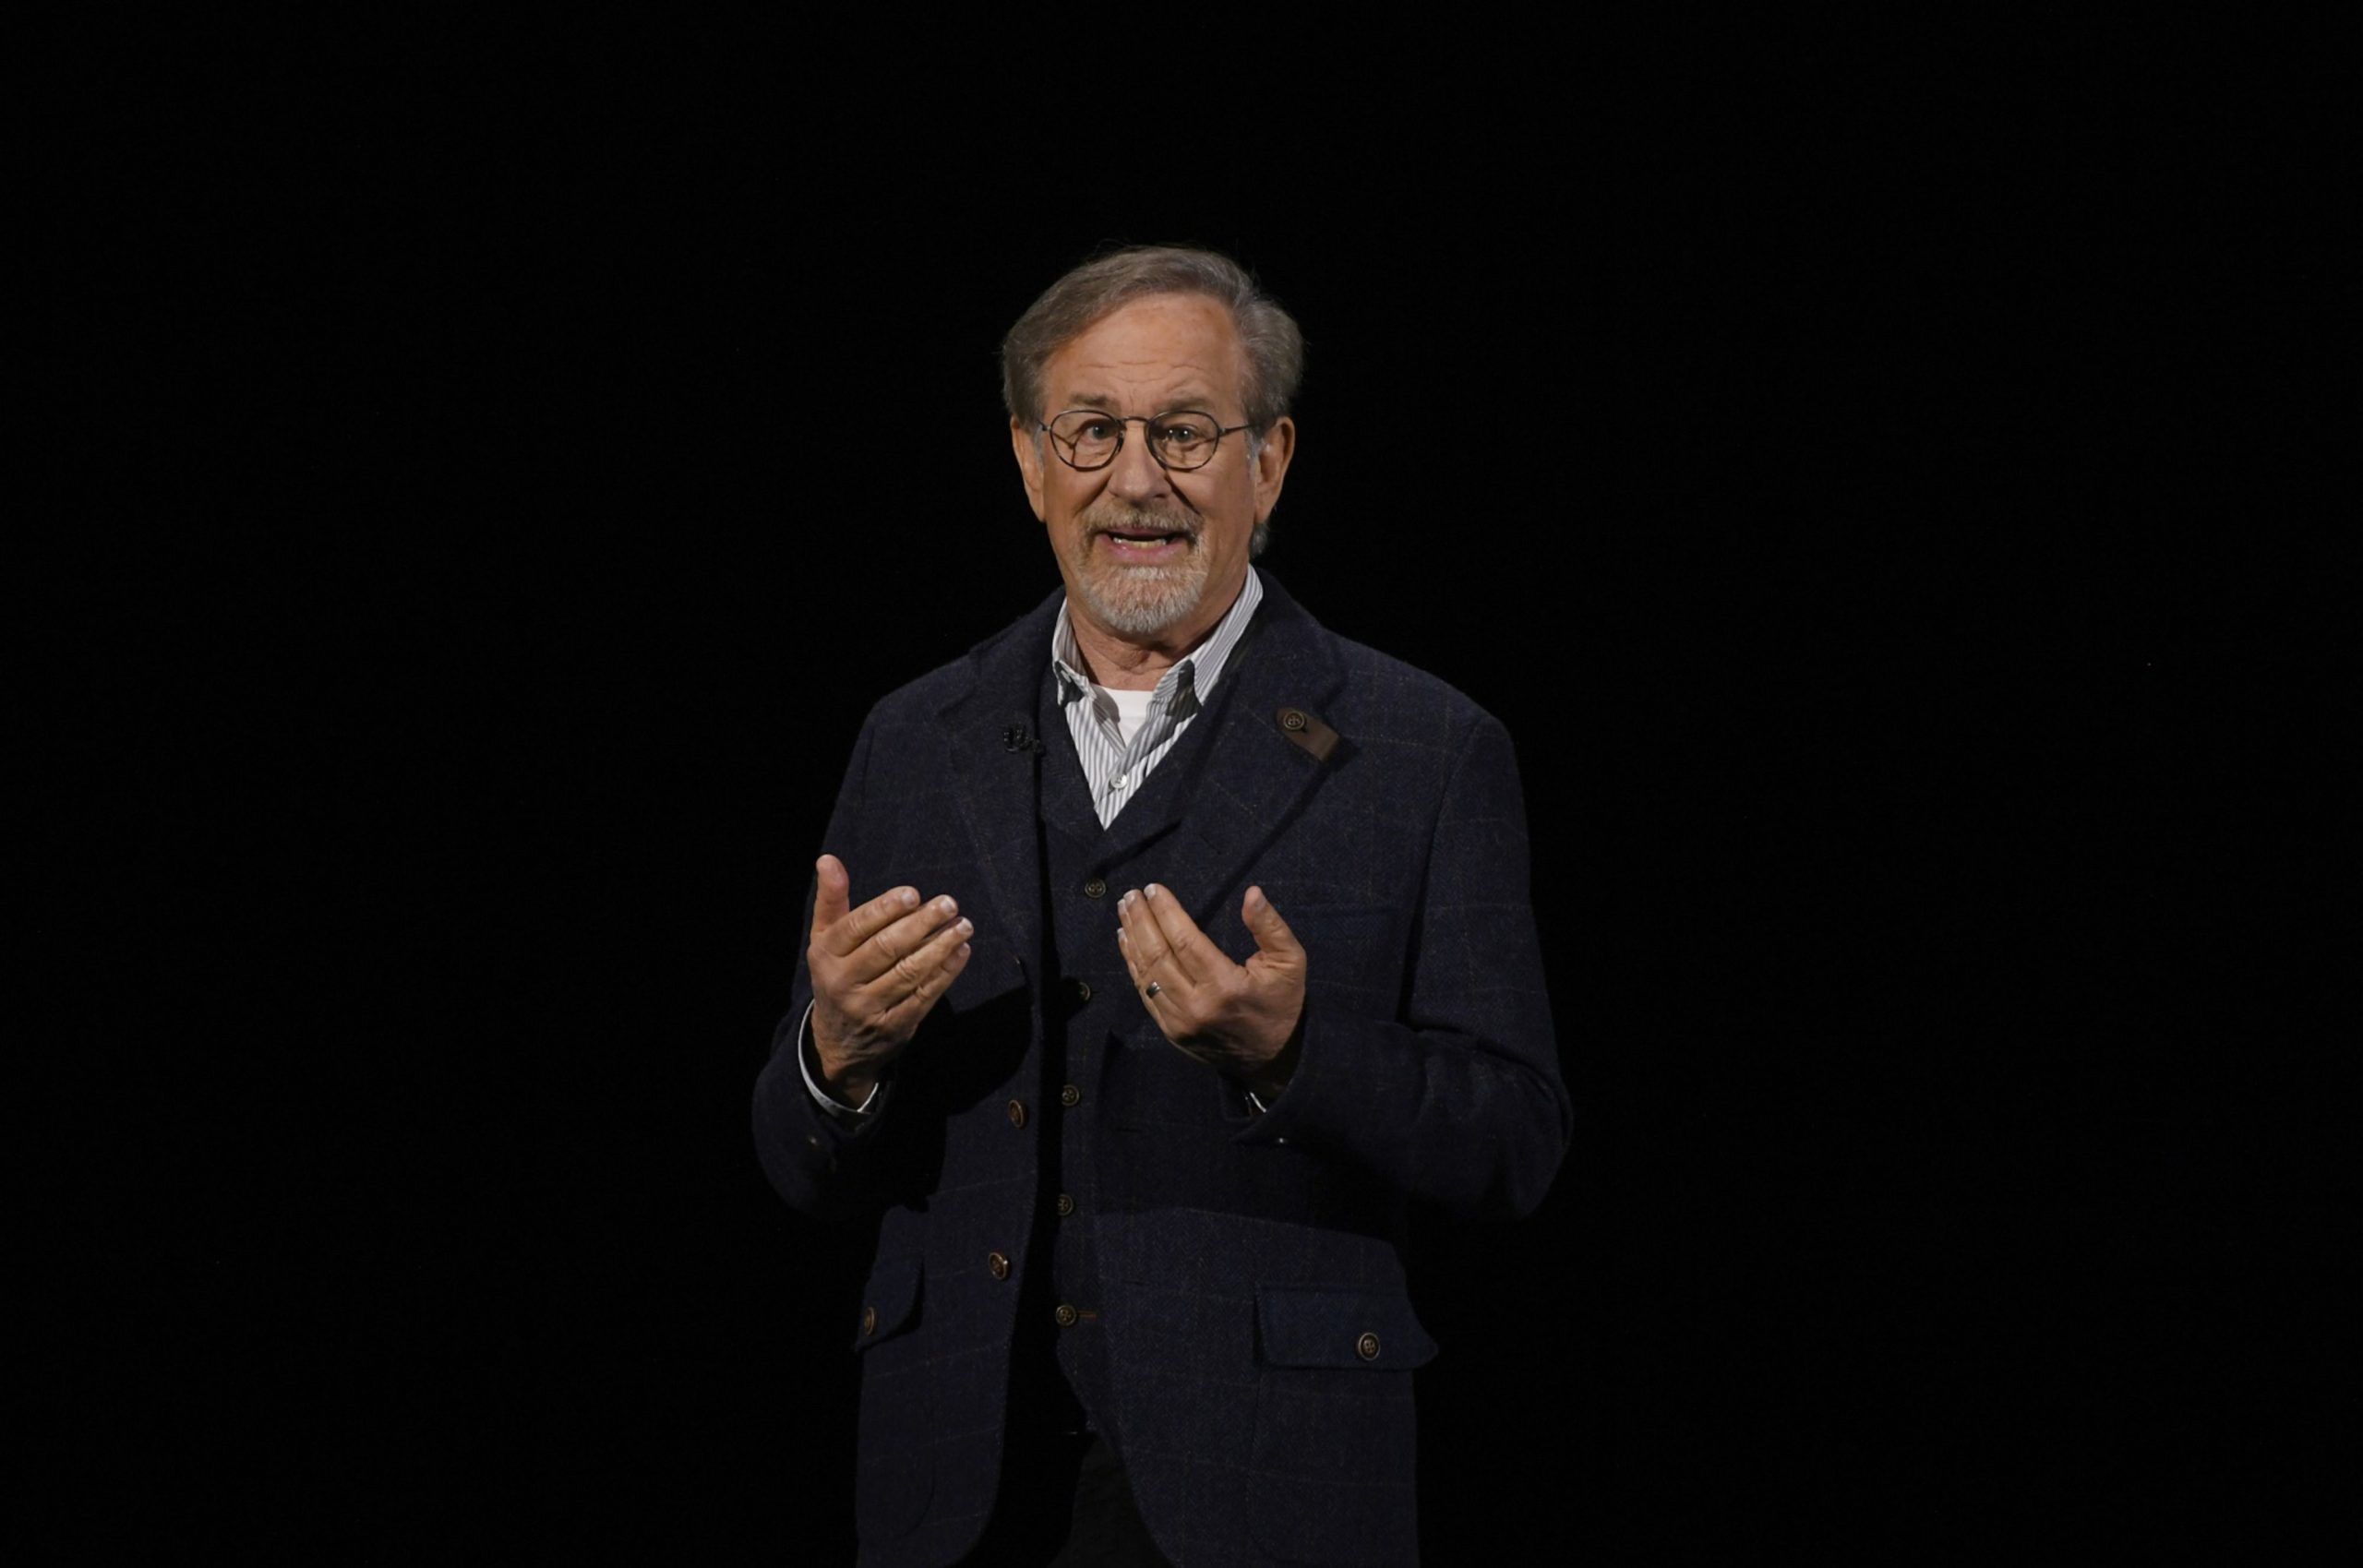 Filmmaker Steven Spielberg smiles during an Apple Inc. event 